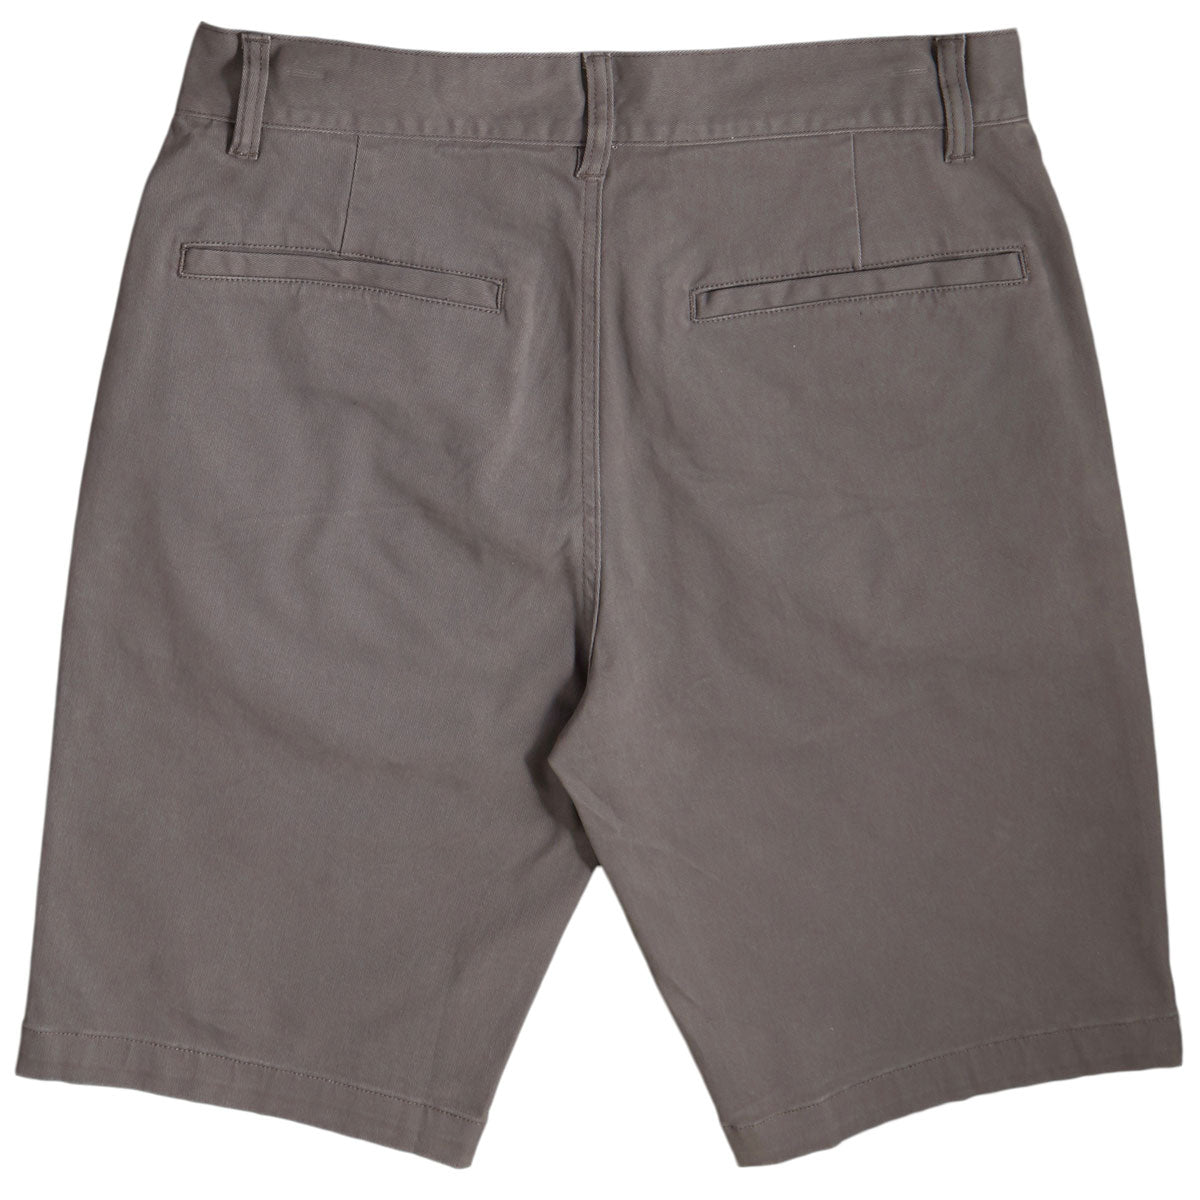 CCS Standard Plus Chino Shorts - Grey image 6